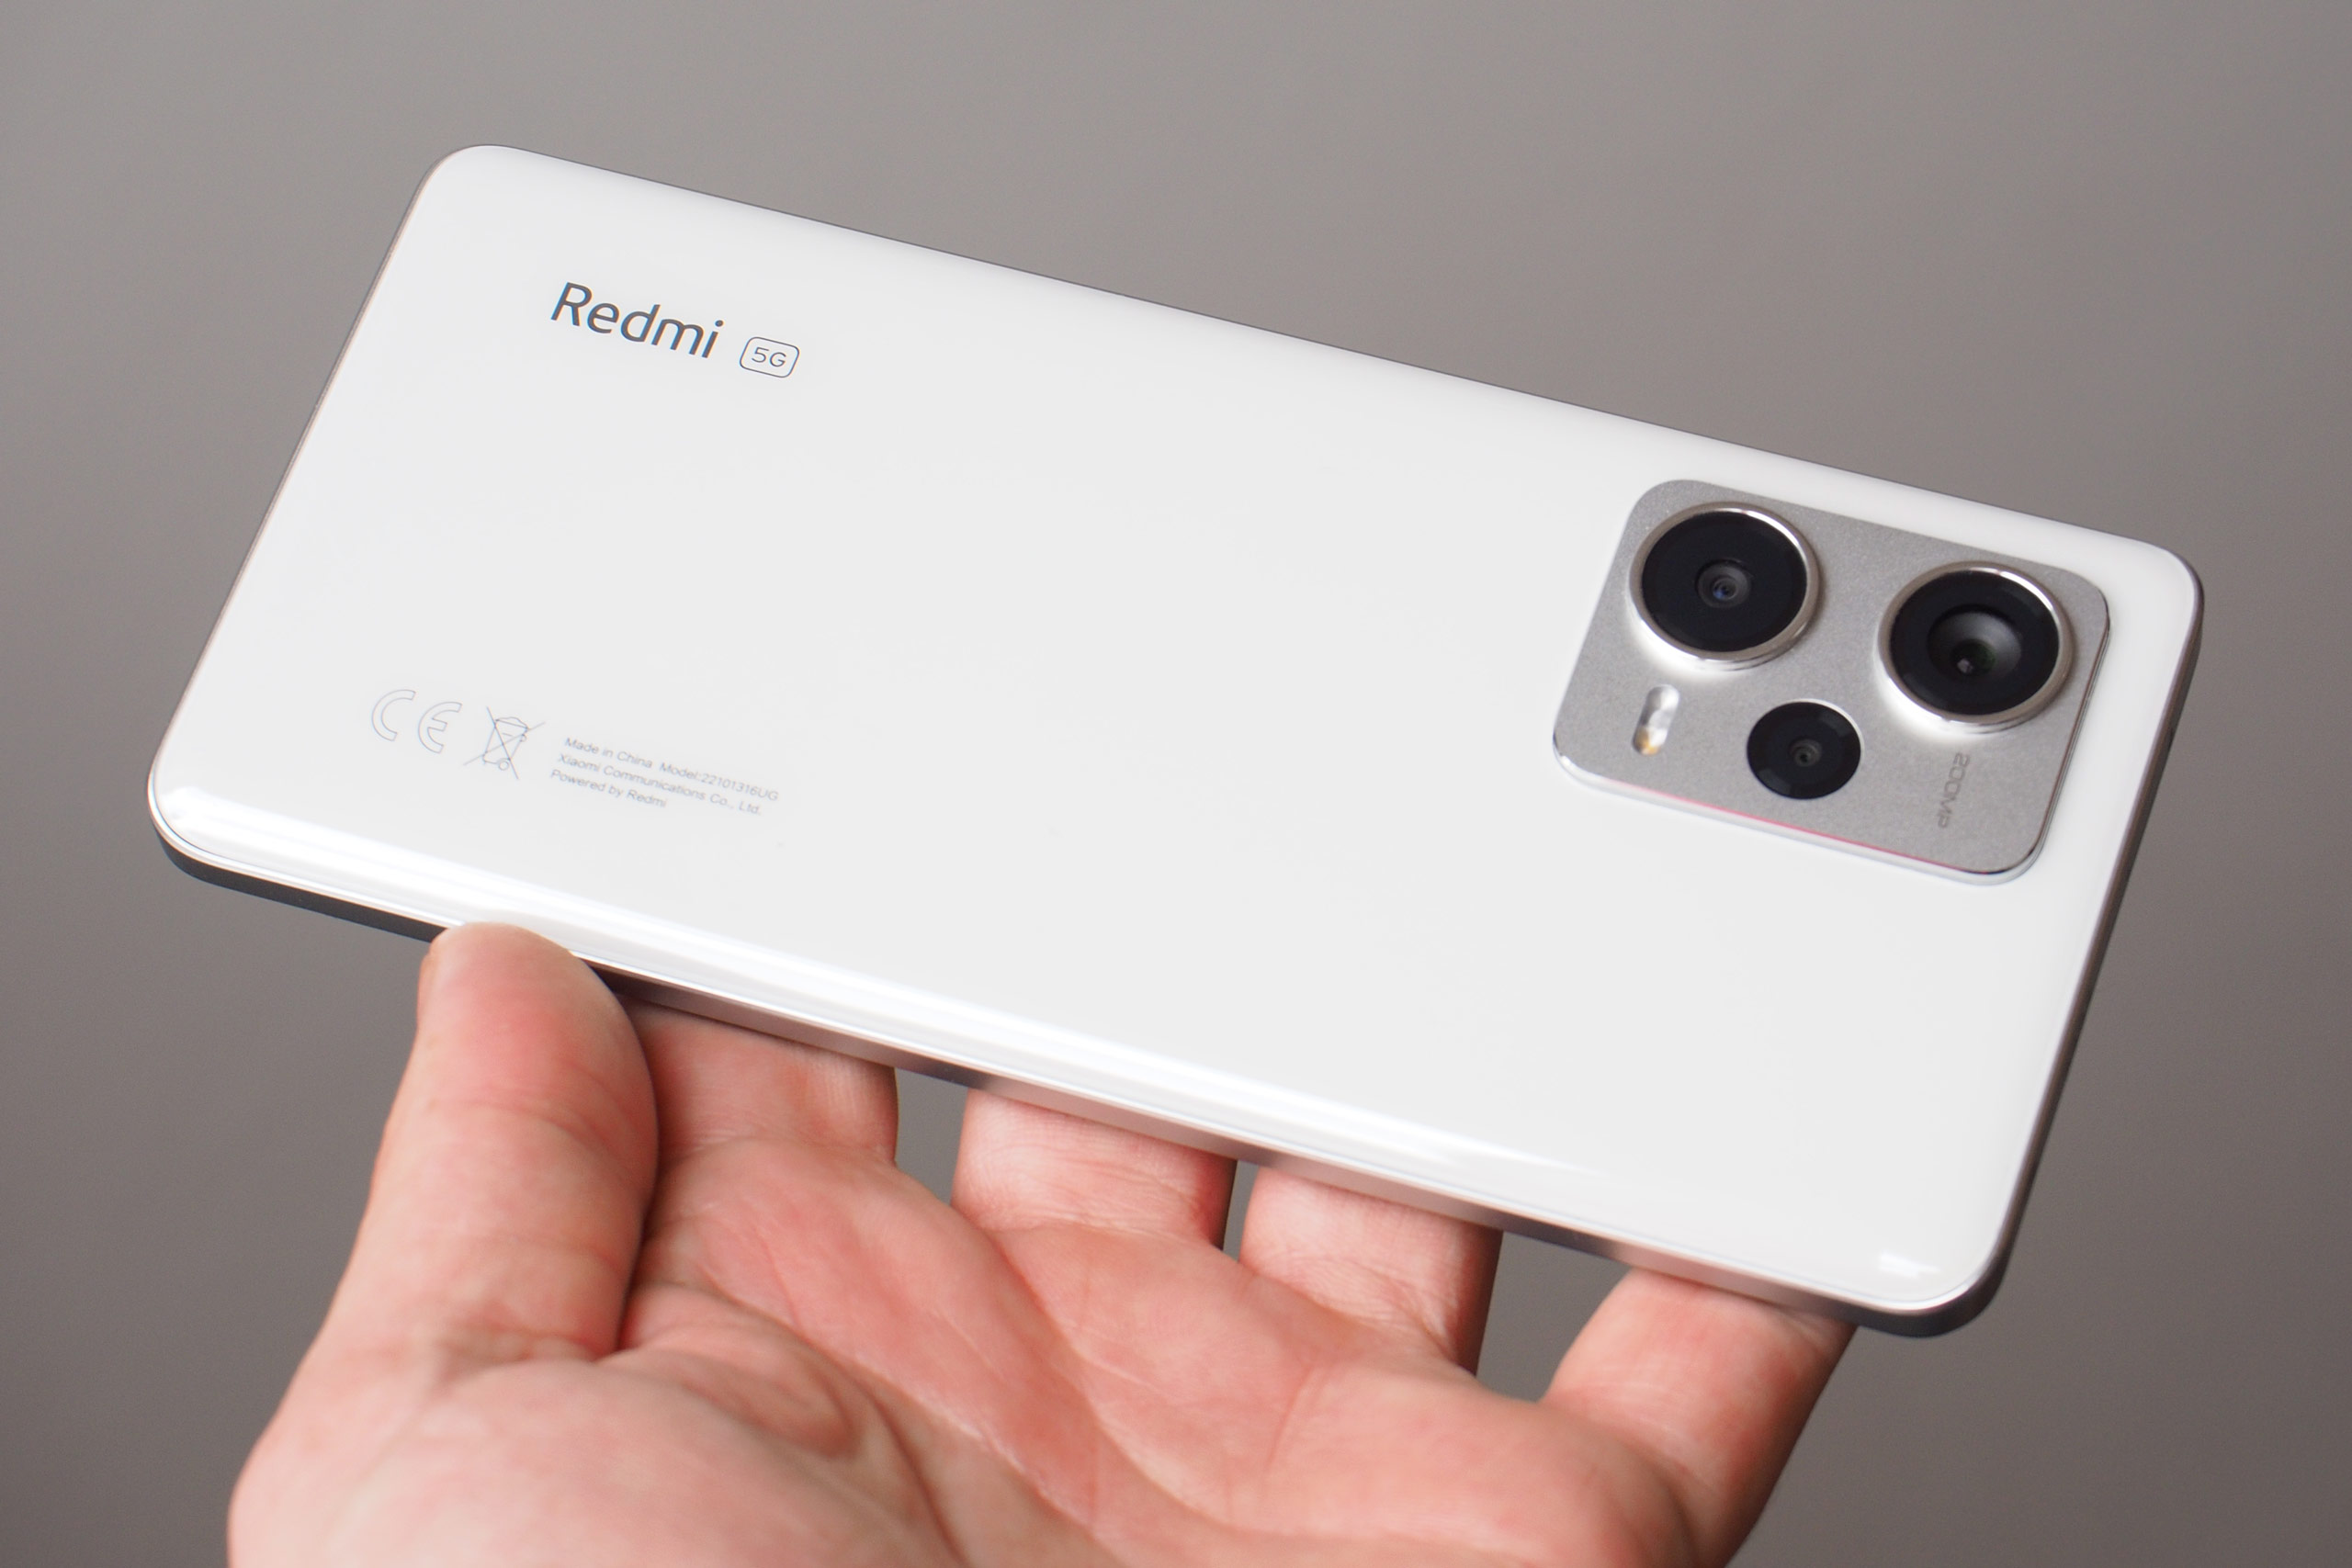 Xiaomi Redmi Note 12 Pro review -  tests